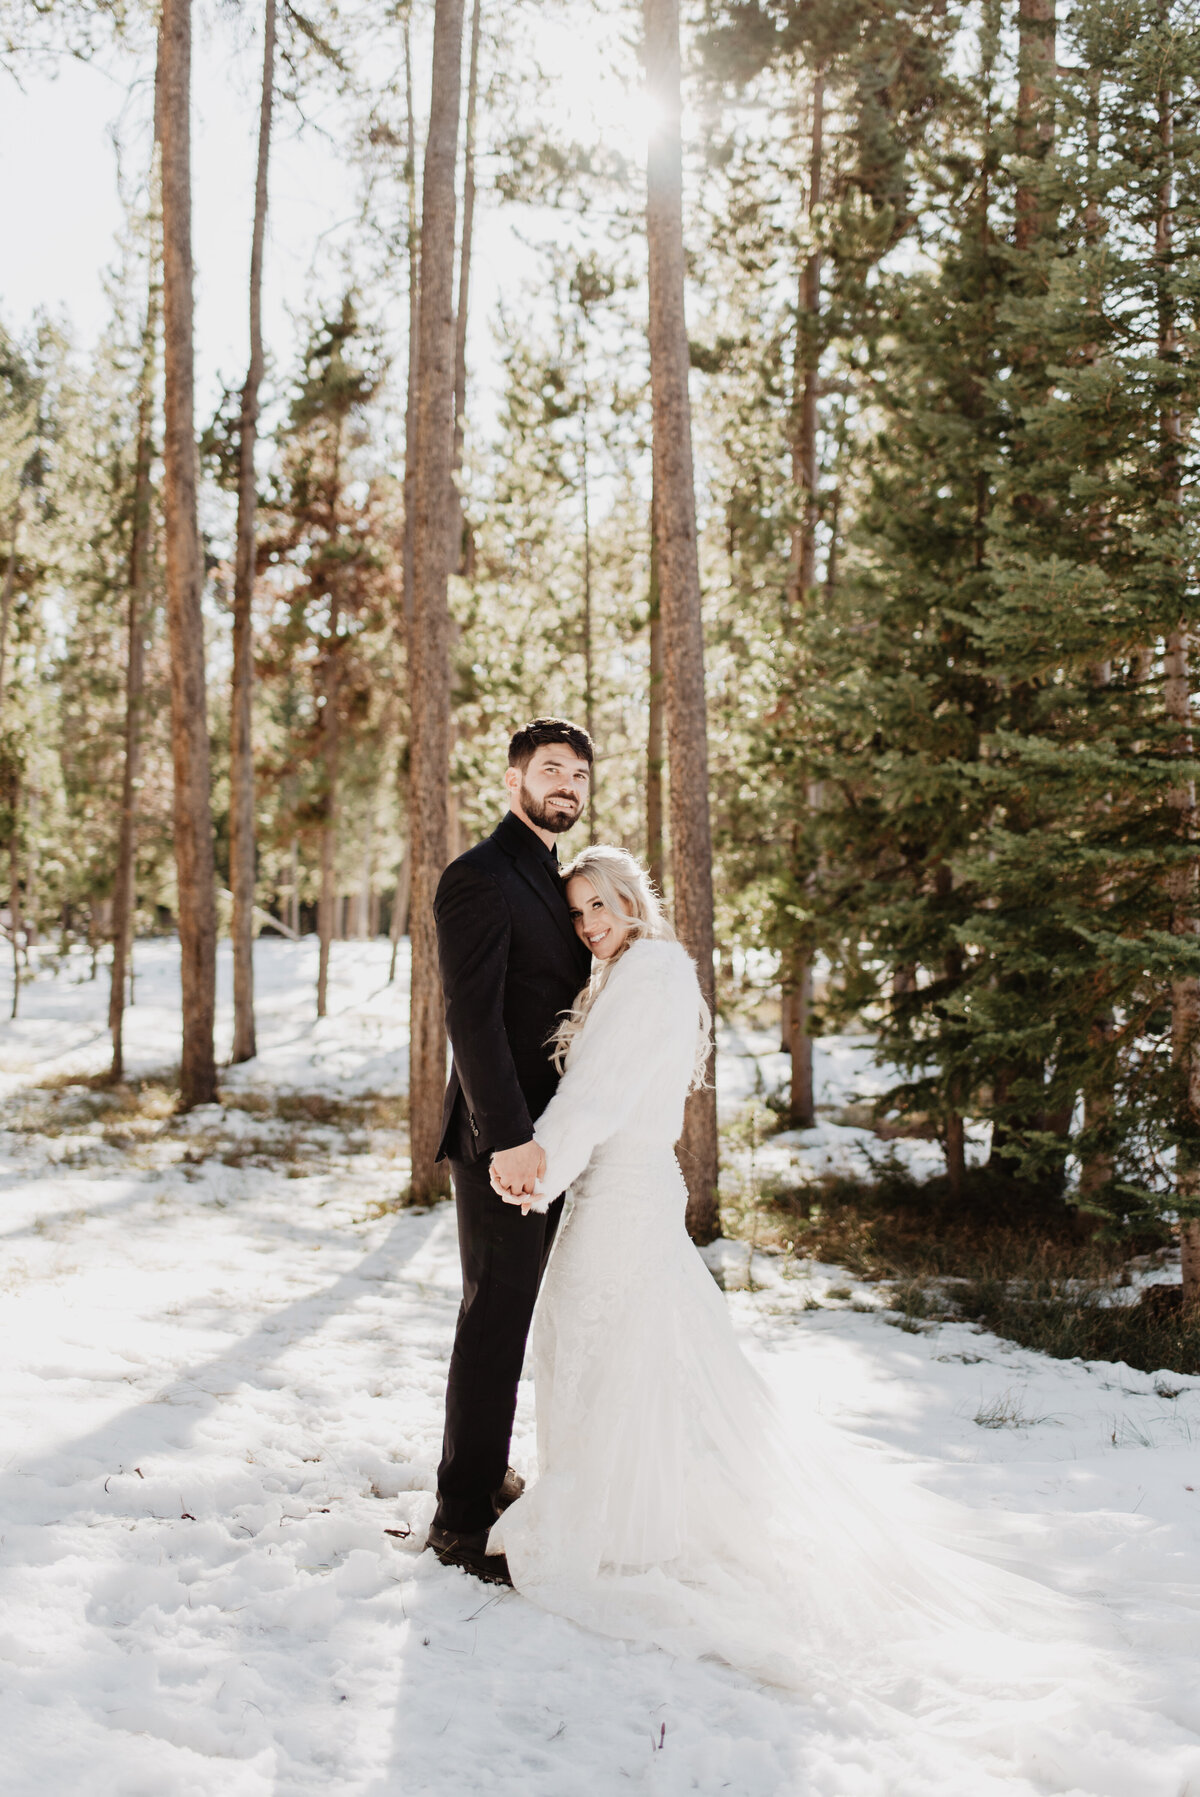 Jackson Hole Photographers capture winter bridal portraits in forest